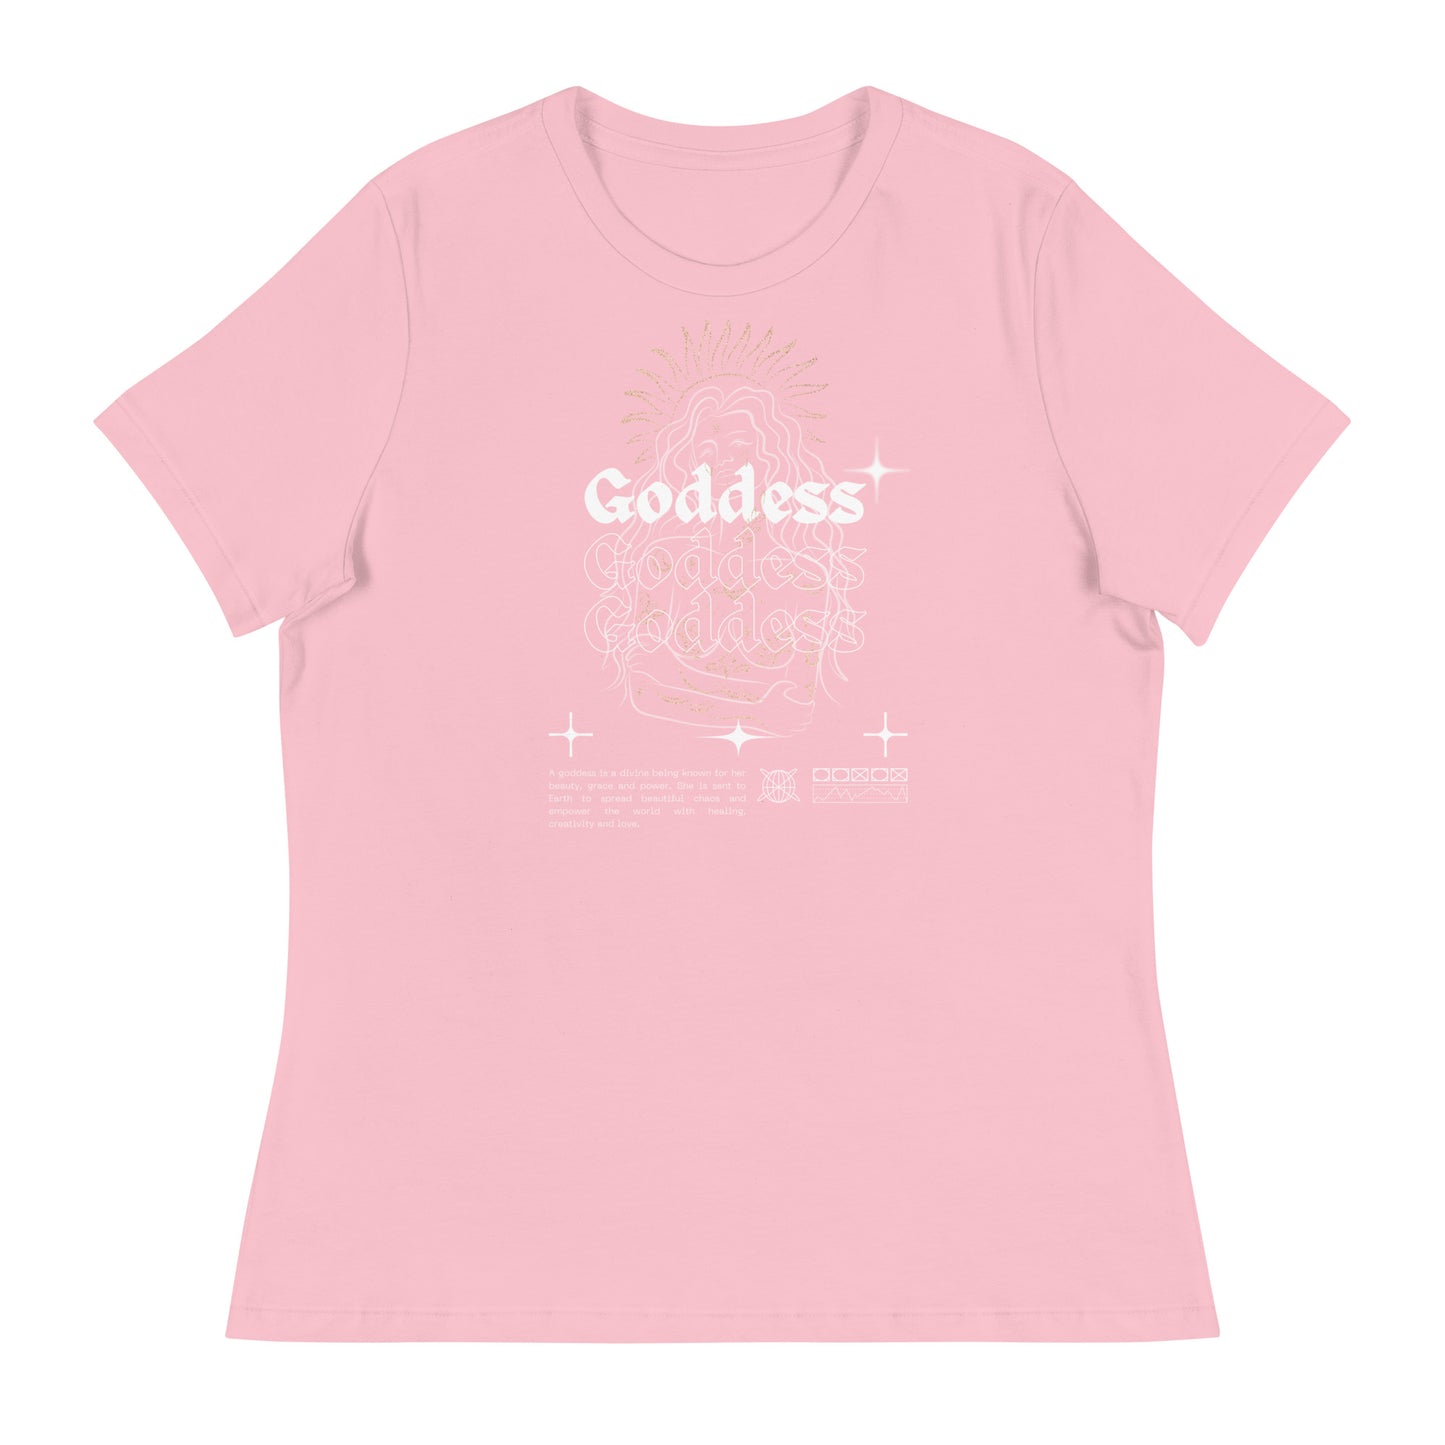 Goddess Graphic Tee